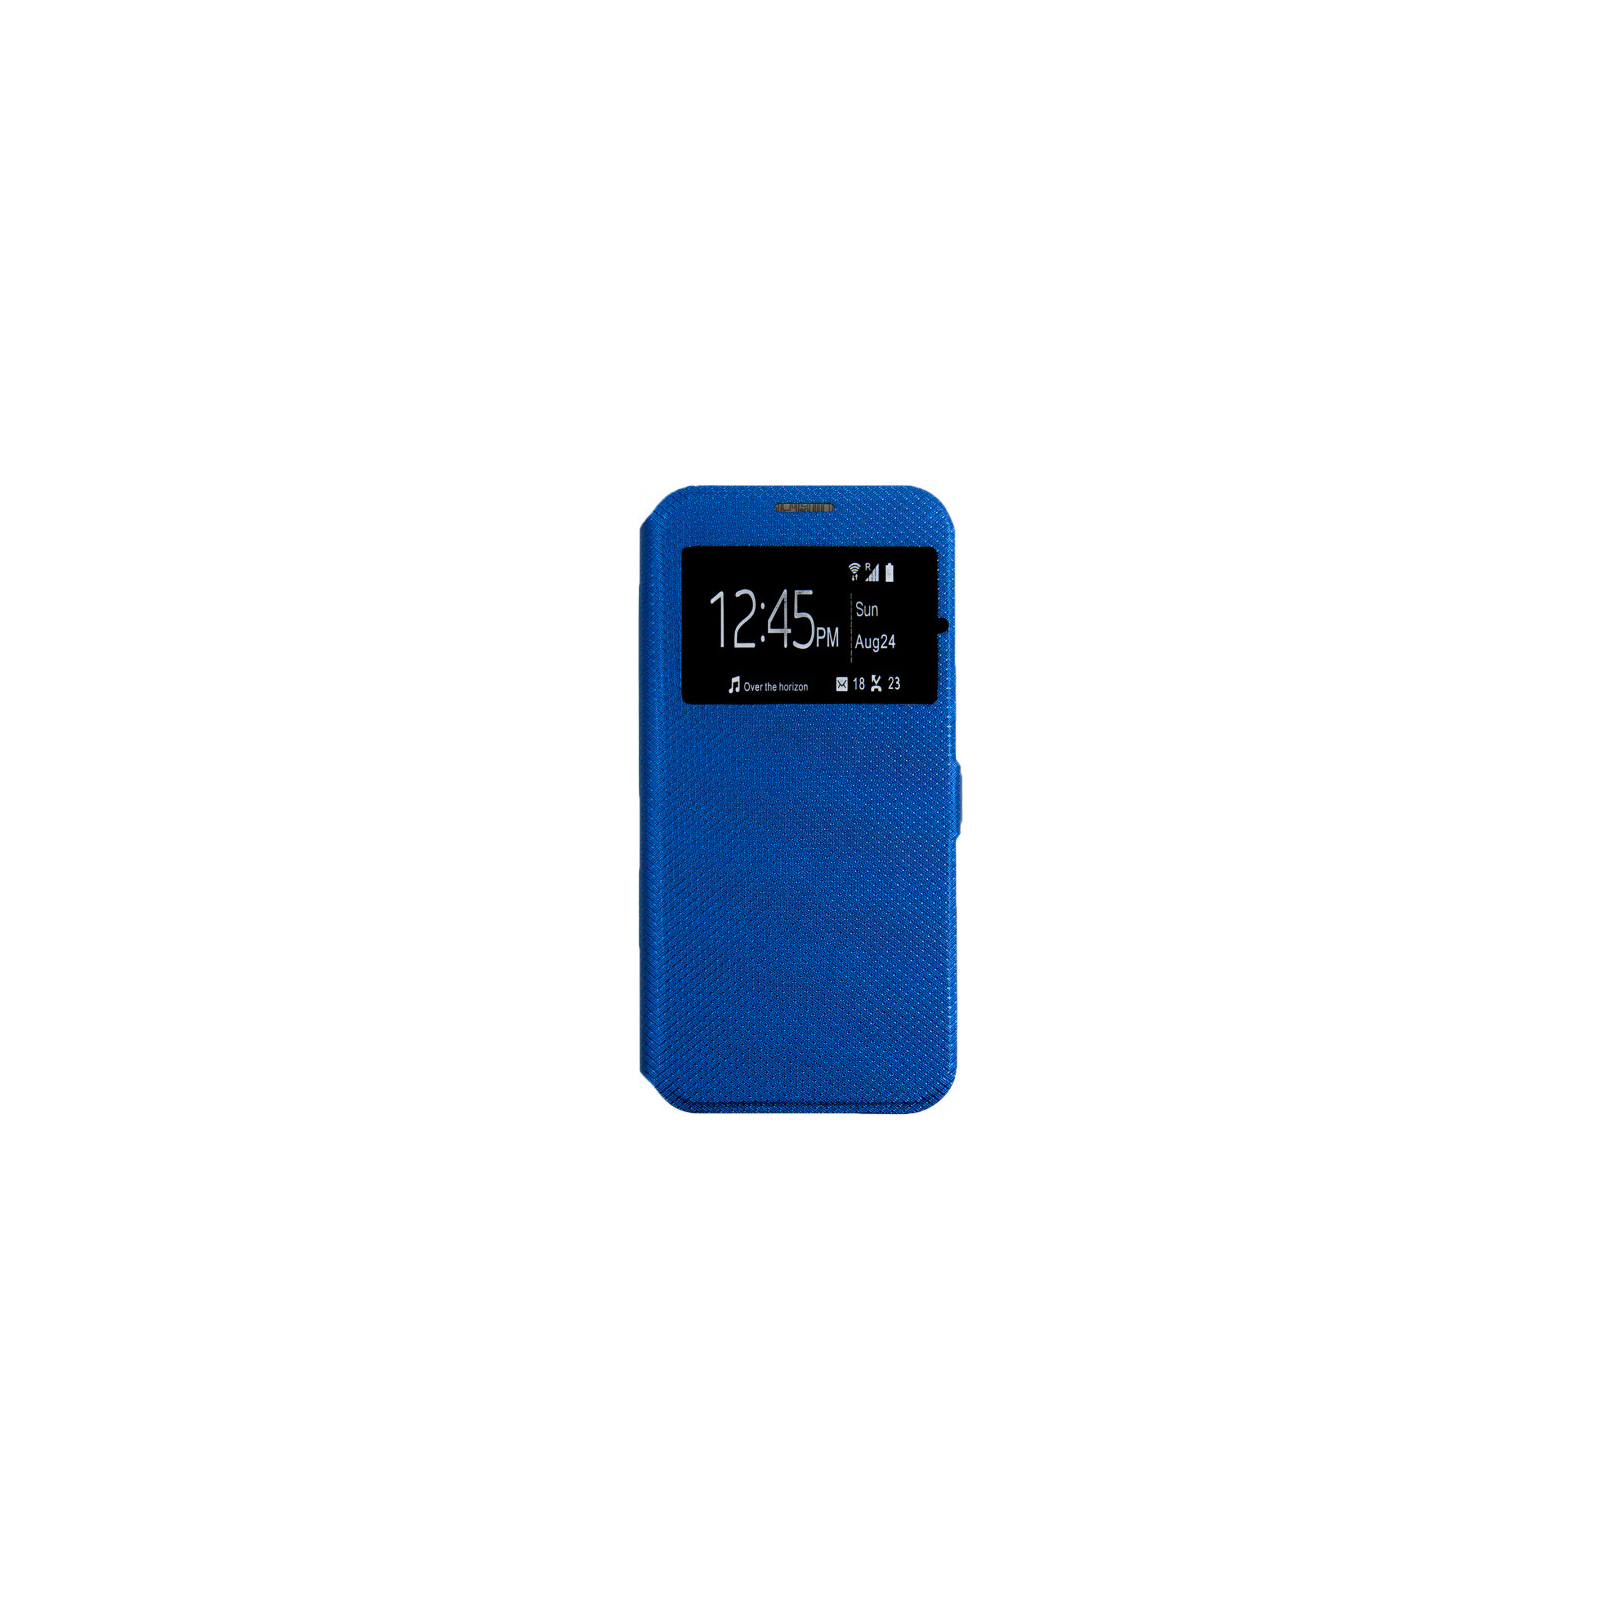 Чехол для мобильного телефона Dengos Flipp-Book Call ID Xiaomi Redmi Note 8, black (DG-SL-BK-250) (DG-SL-BK-250)